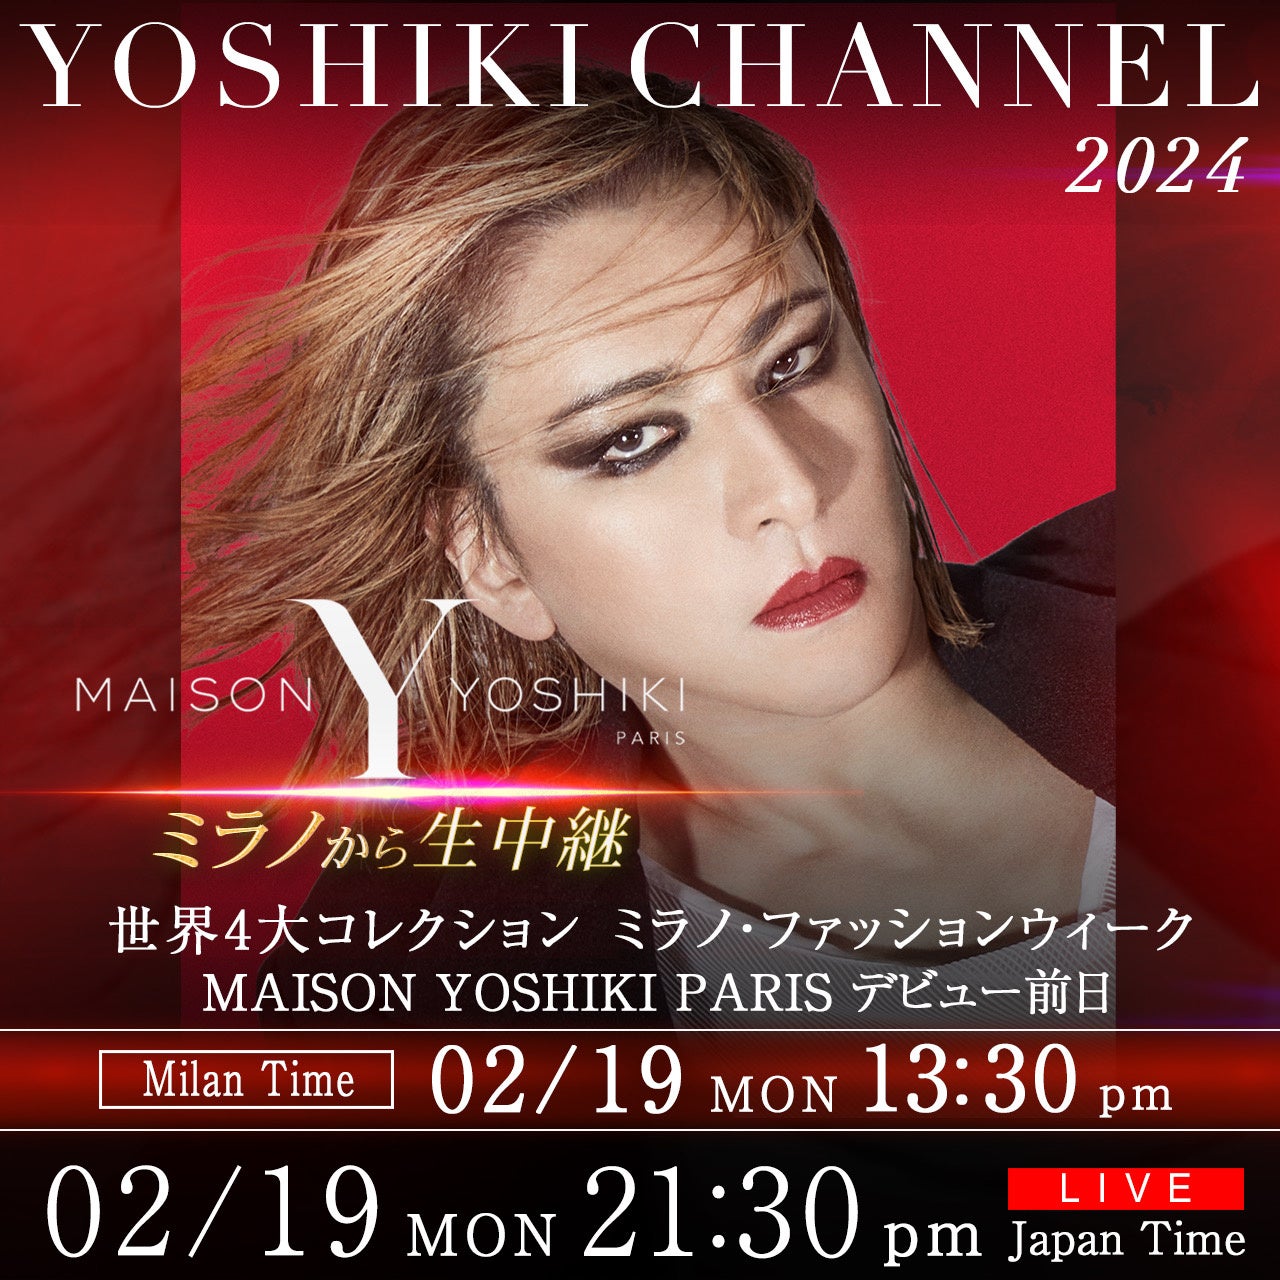 YOSHIKI仏ファッションブランド『MAISON YOSHIKI PARIS』デビュー記念スペシャル生放送 ミラノ・ファッションウィーク ショー前日に現地ミラノから独占生中継